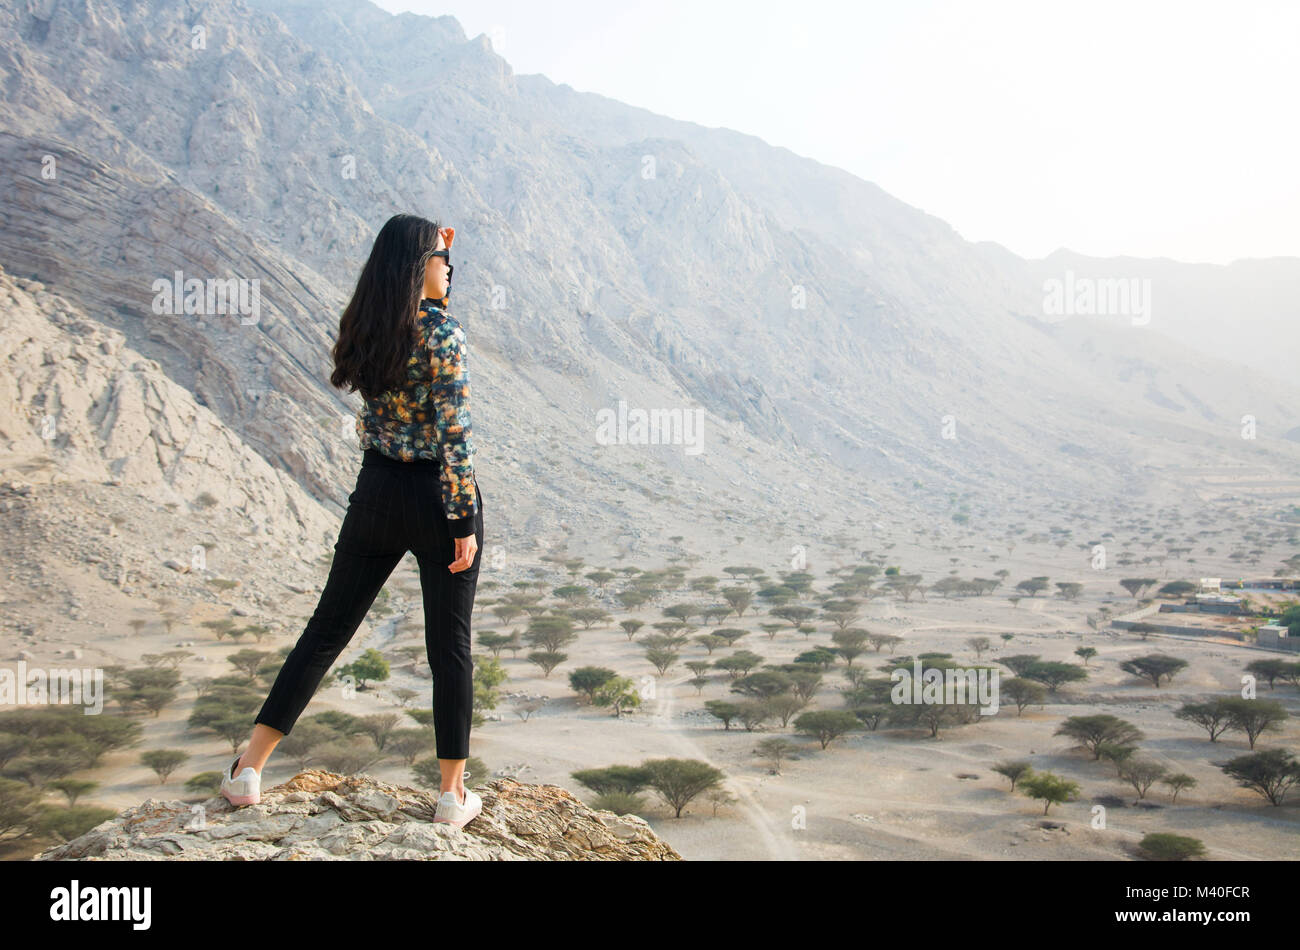 Girl enjoying scenery on a desert hiking trip Stock Photo